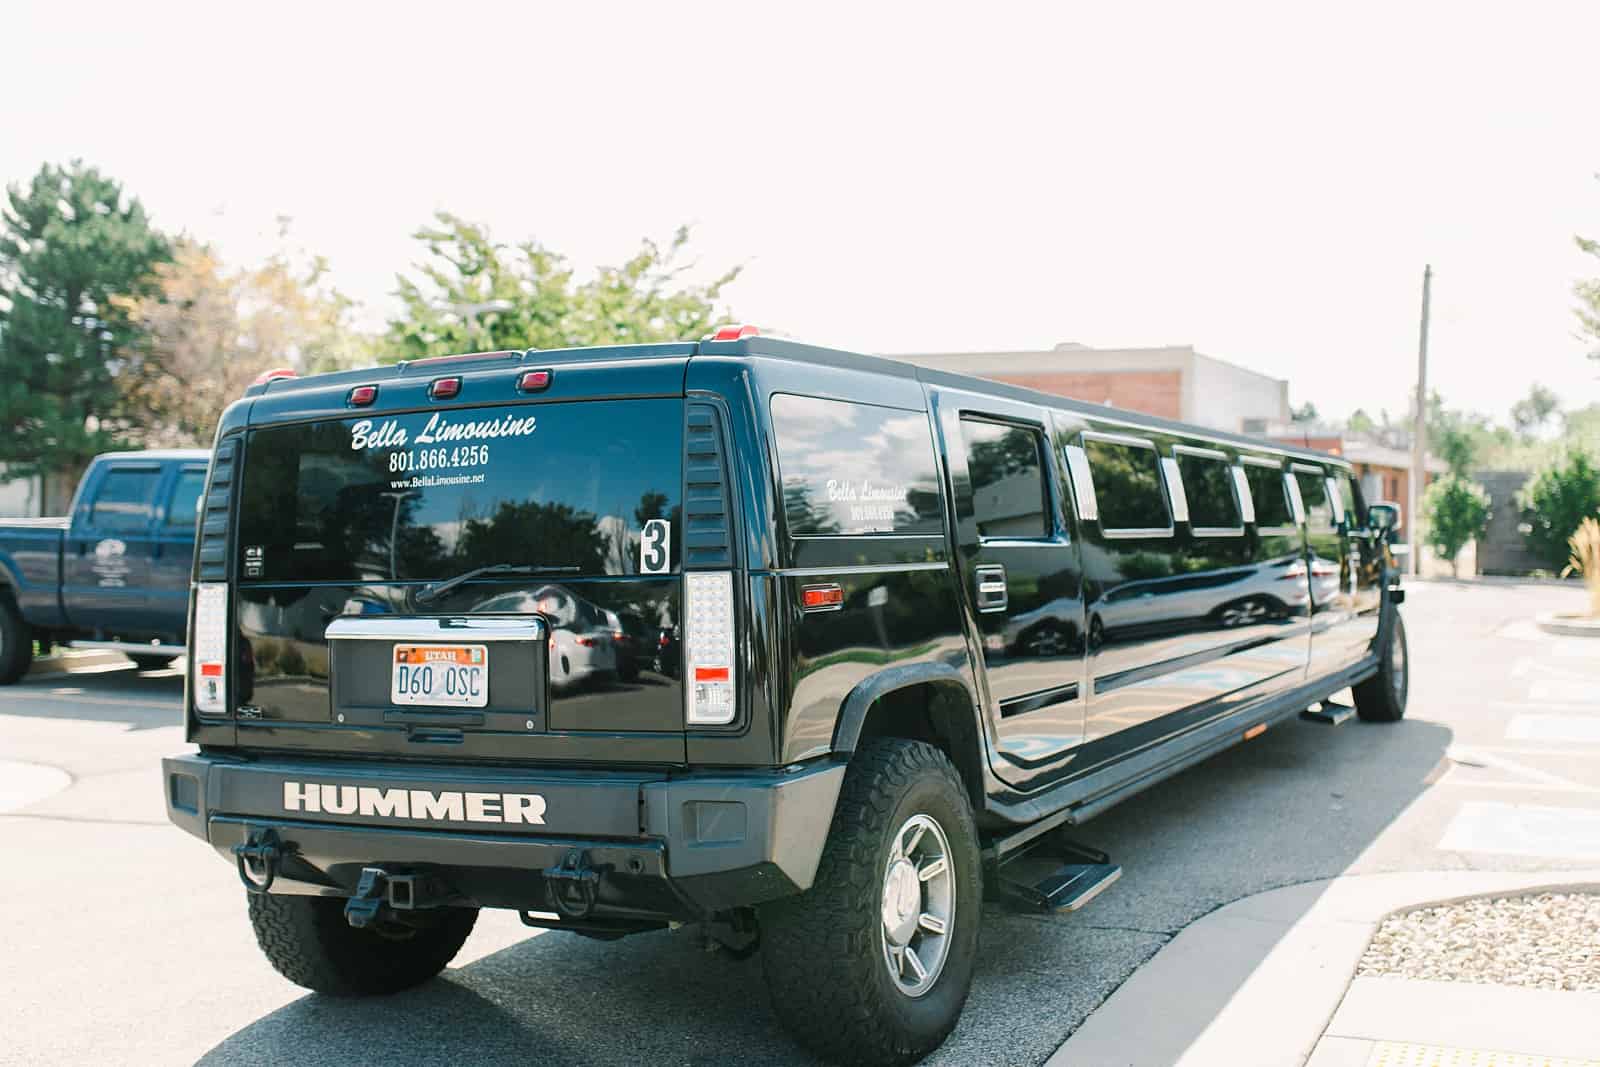 Hummer stretch limo for wedding getaway car